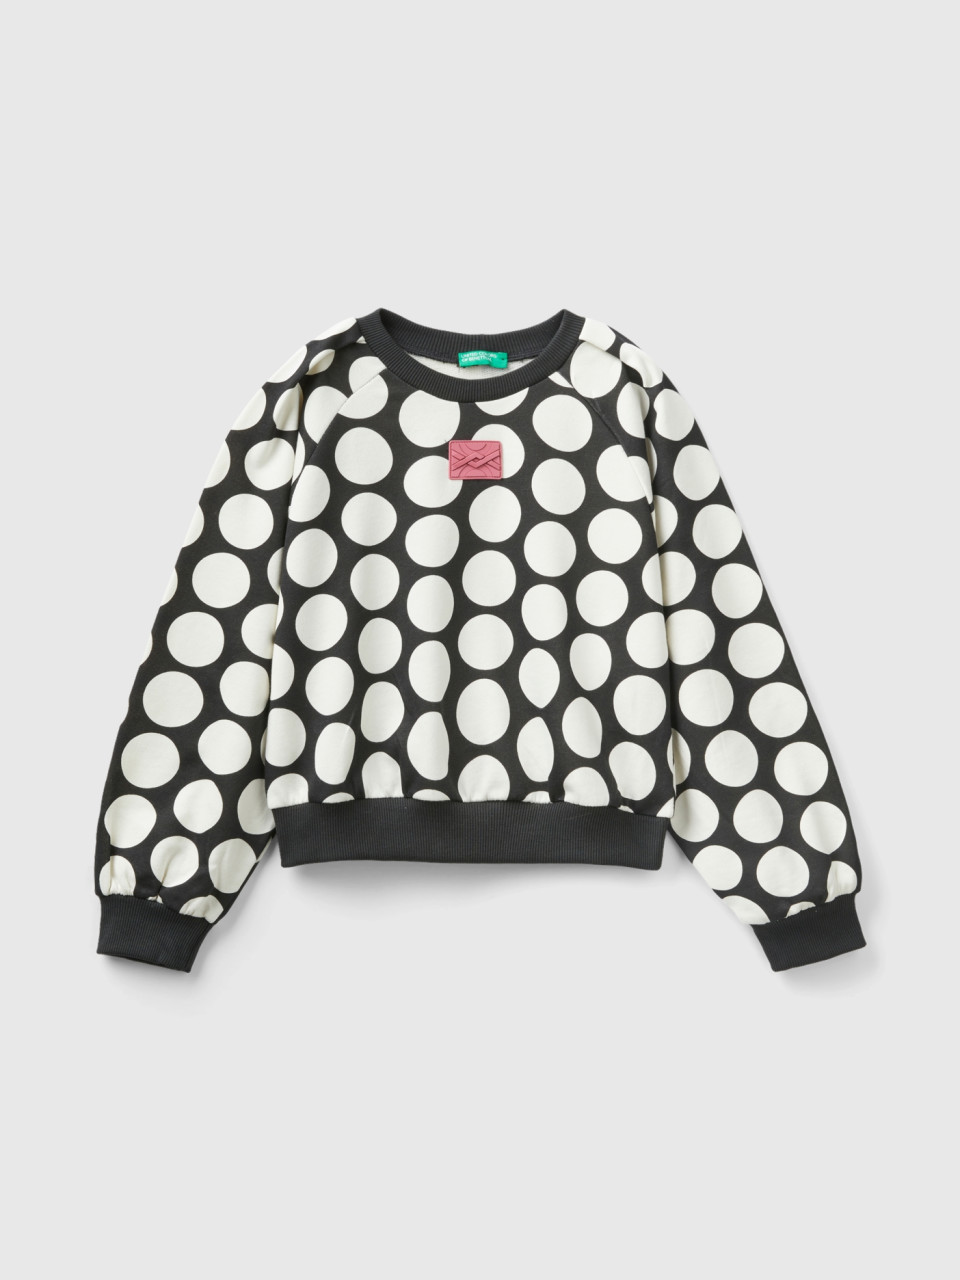 Benetton, 100% Cotton Sweatshirt With Polka Dots, Multi-color, Kids